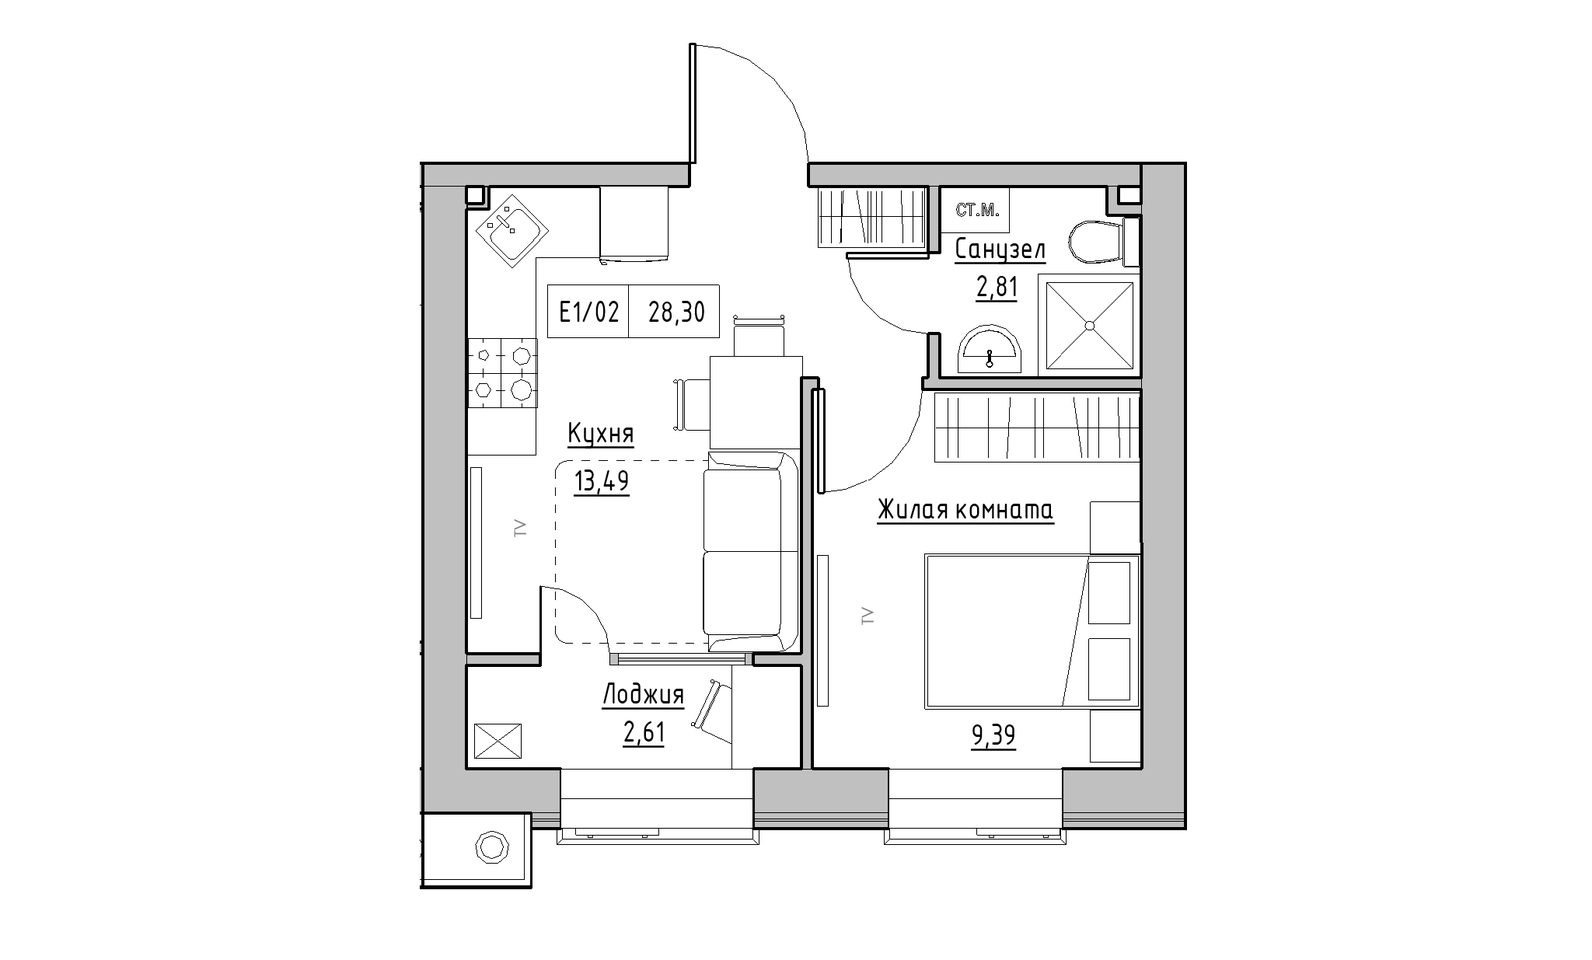 Planning 1-rm flats area 28.3m2, KS-014-03/0001.